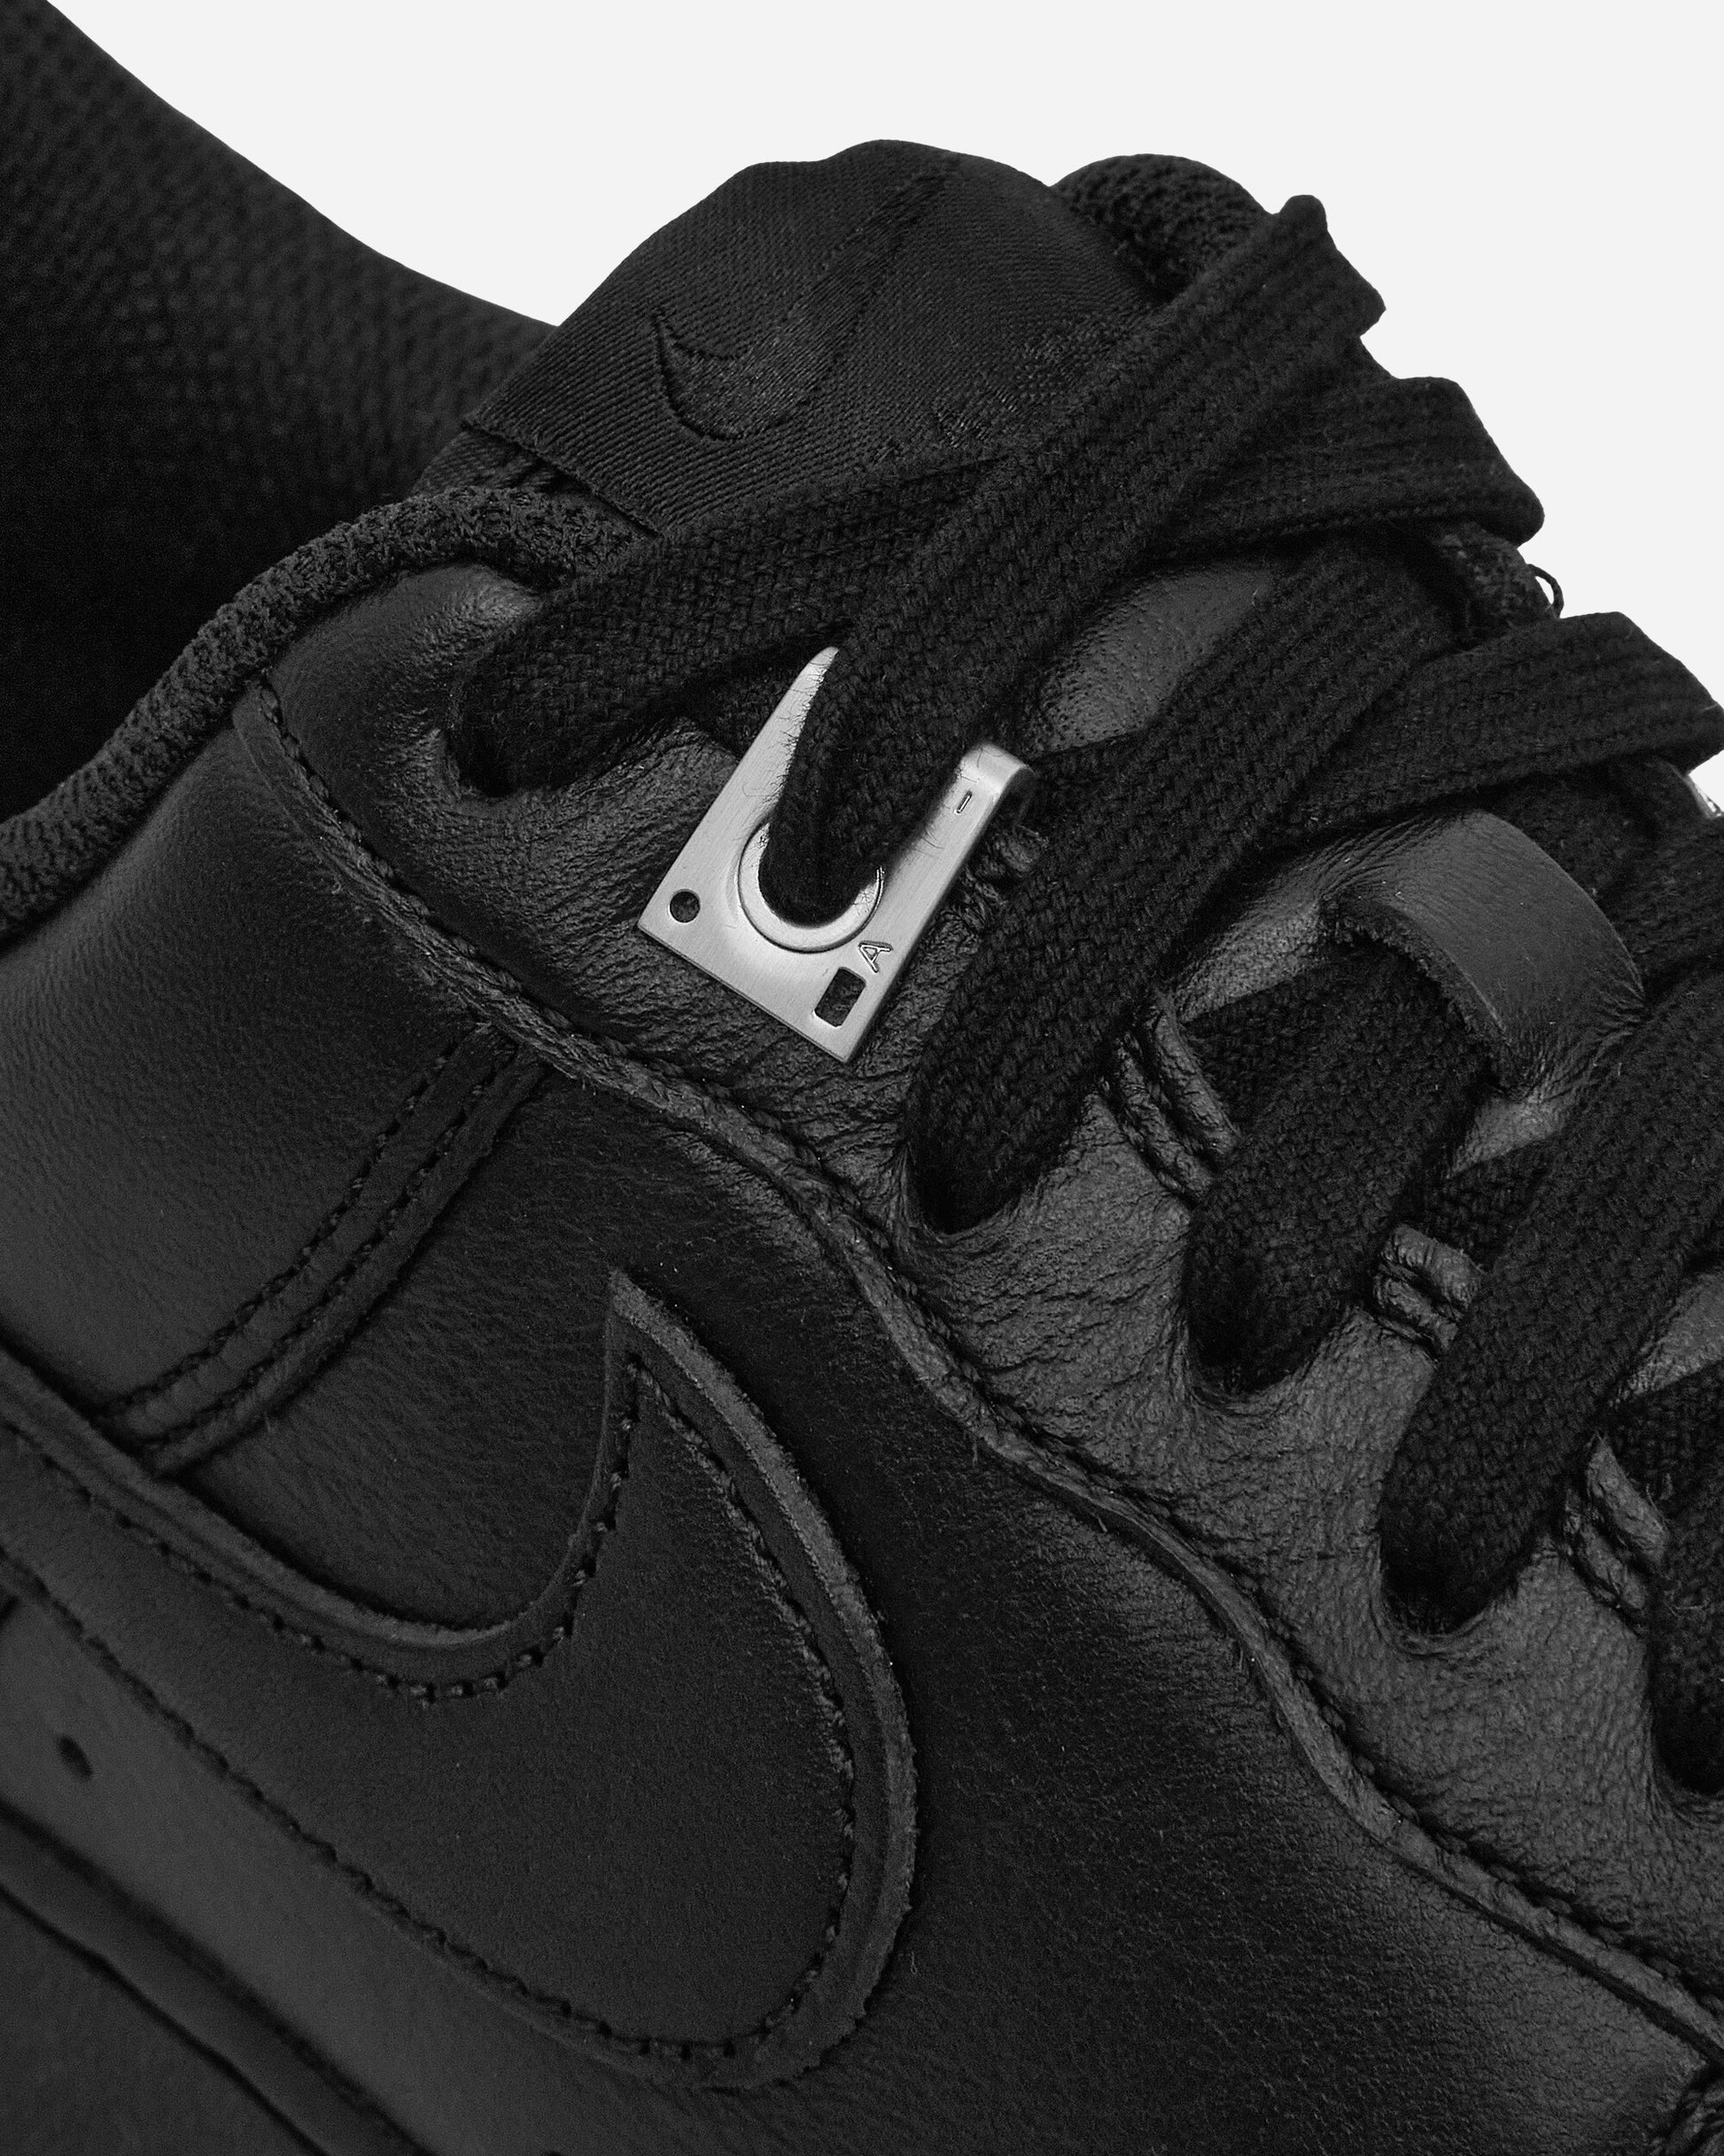 Nike Air Force 1 Sp Black/Black/Black Sneakers Low FJ4908-001